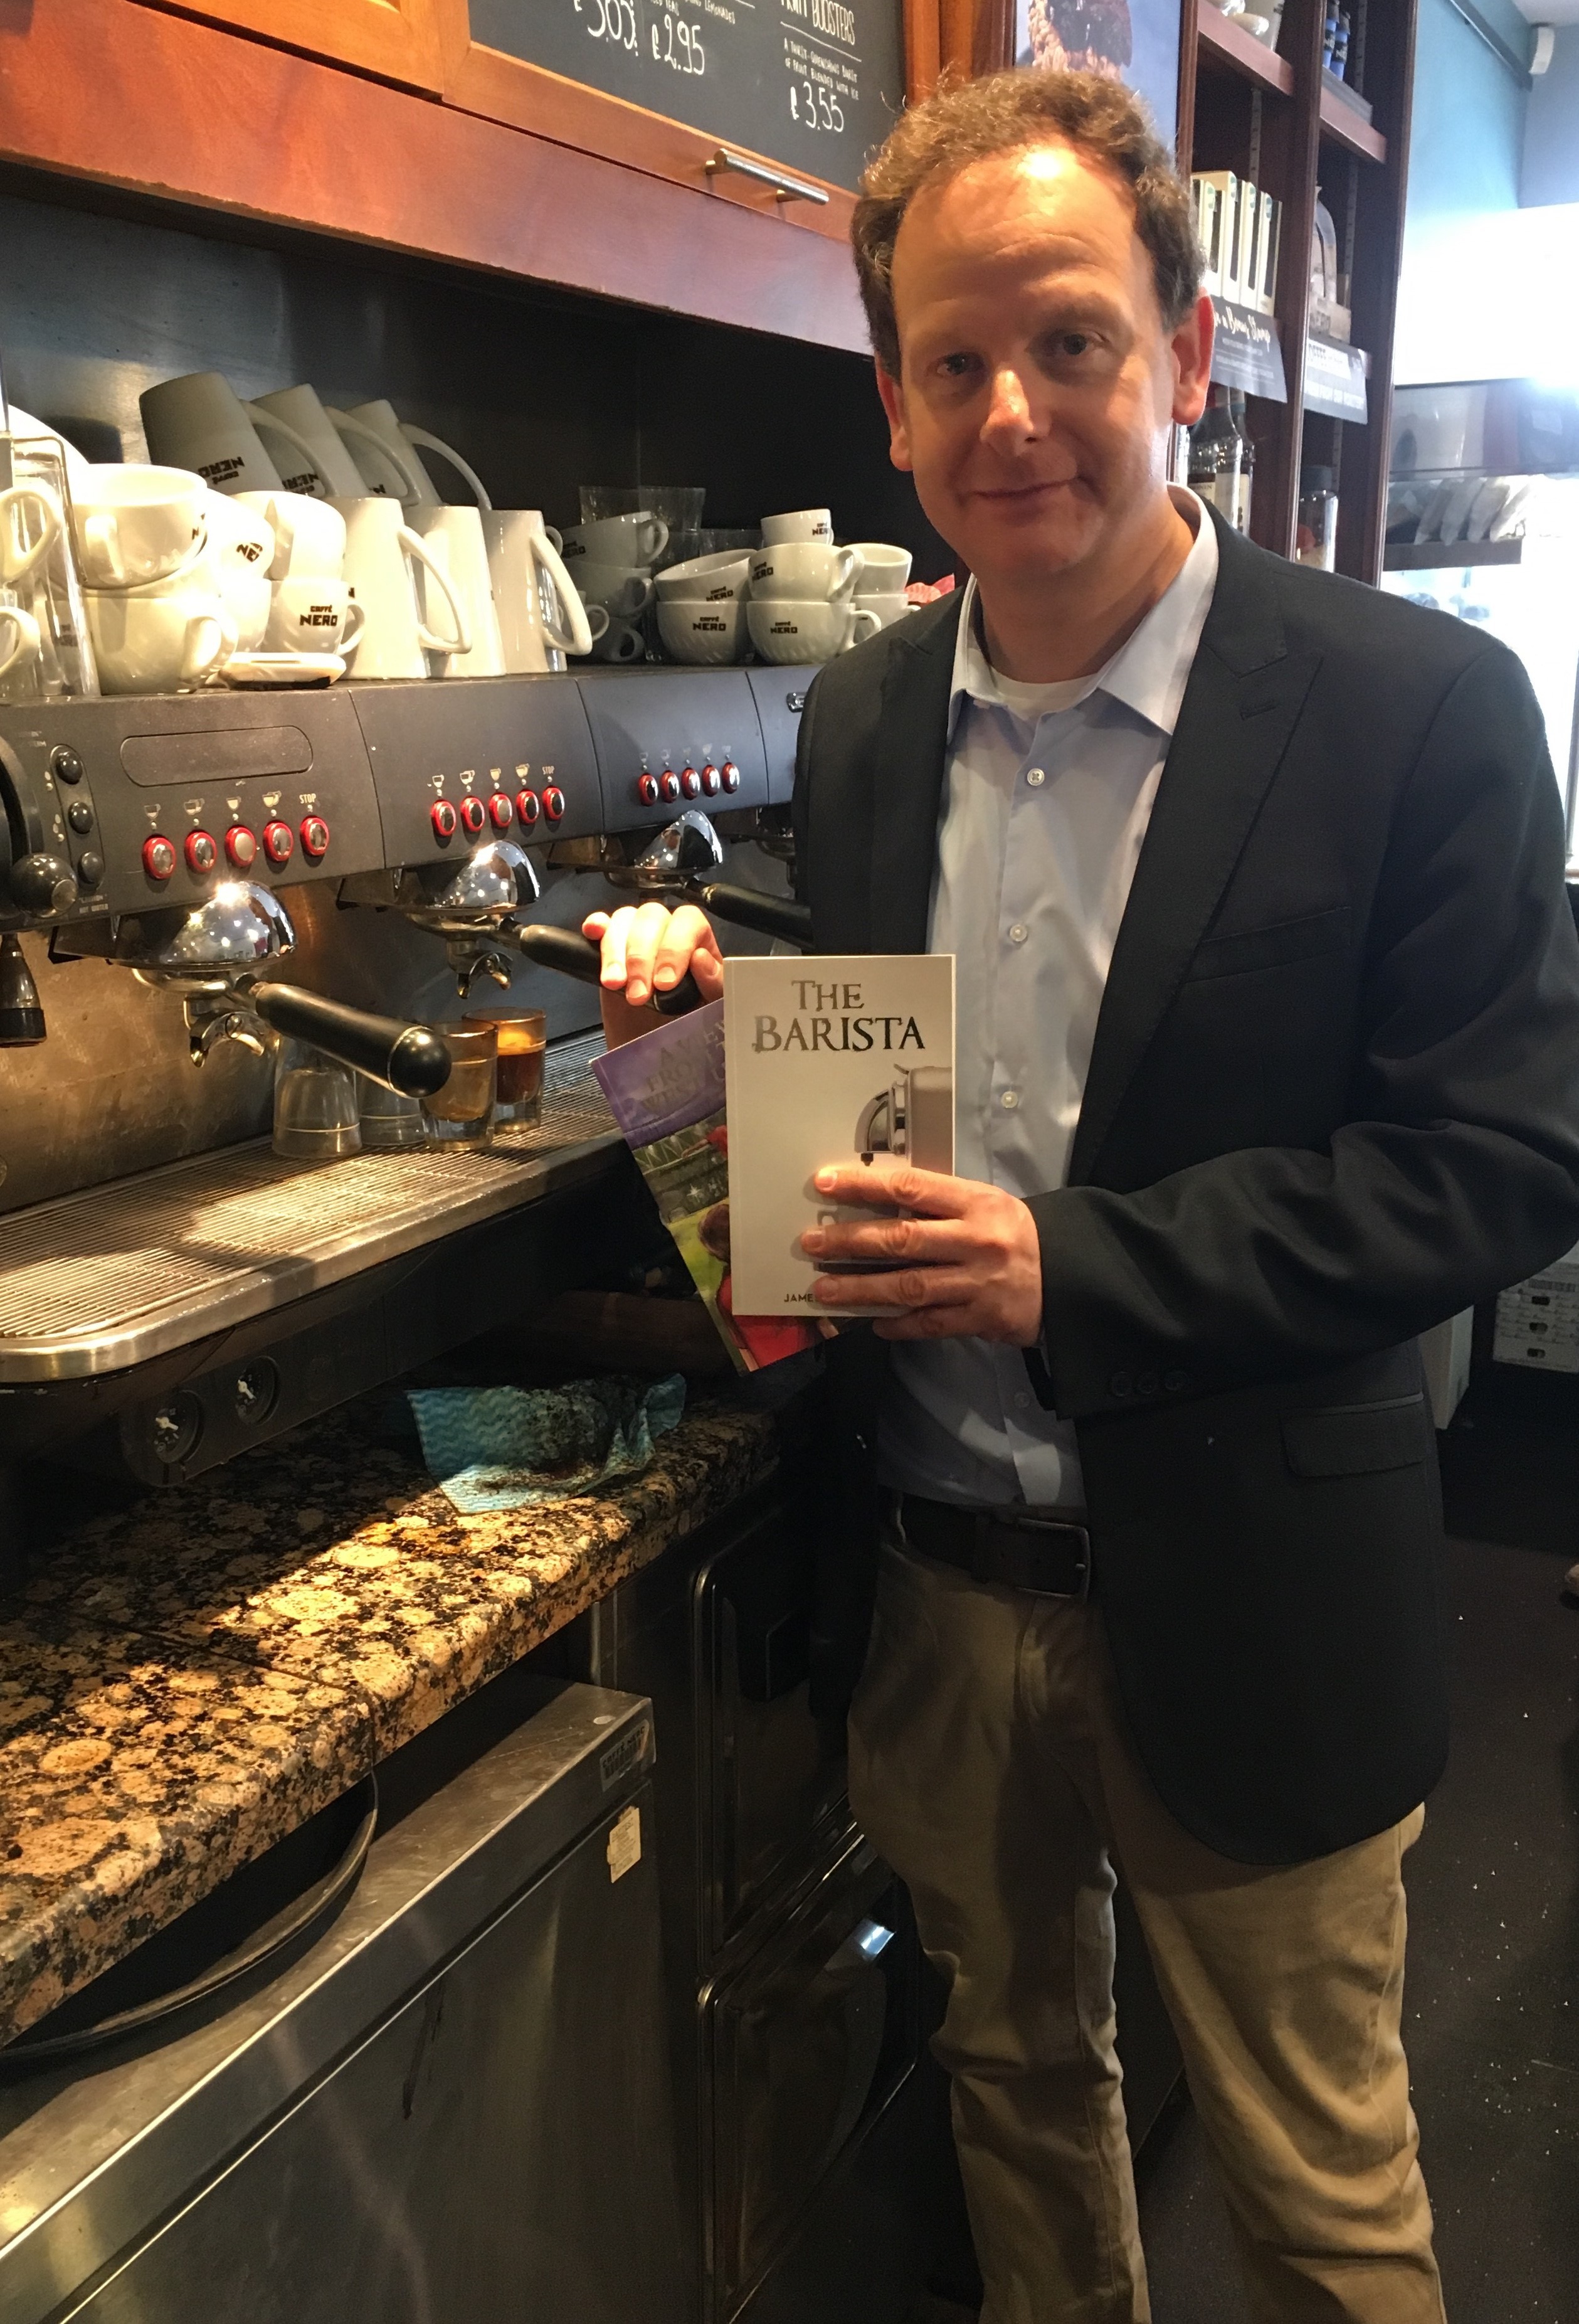 James Harrison visited Café Nero to Promote His Latest Novel The Barista